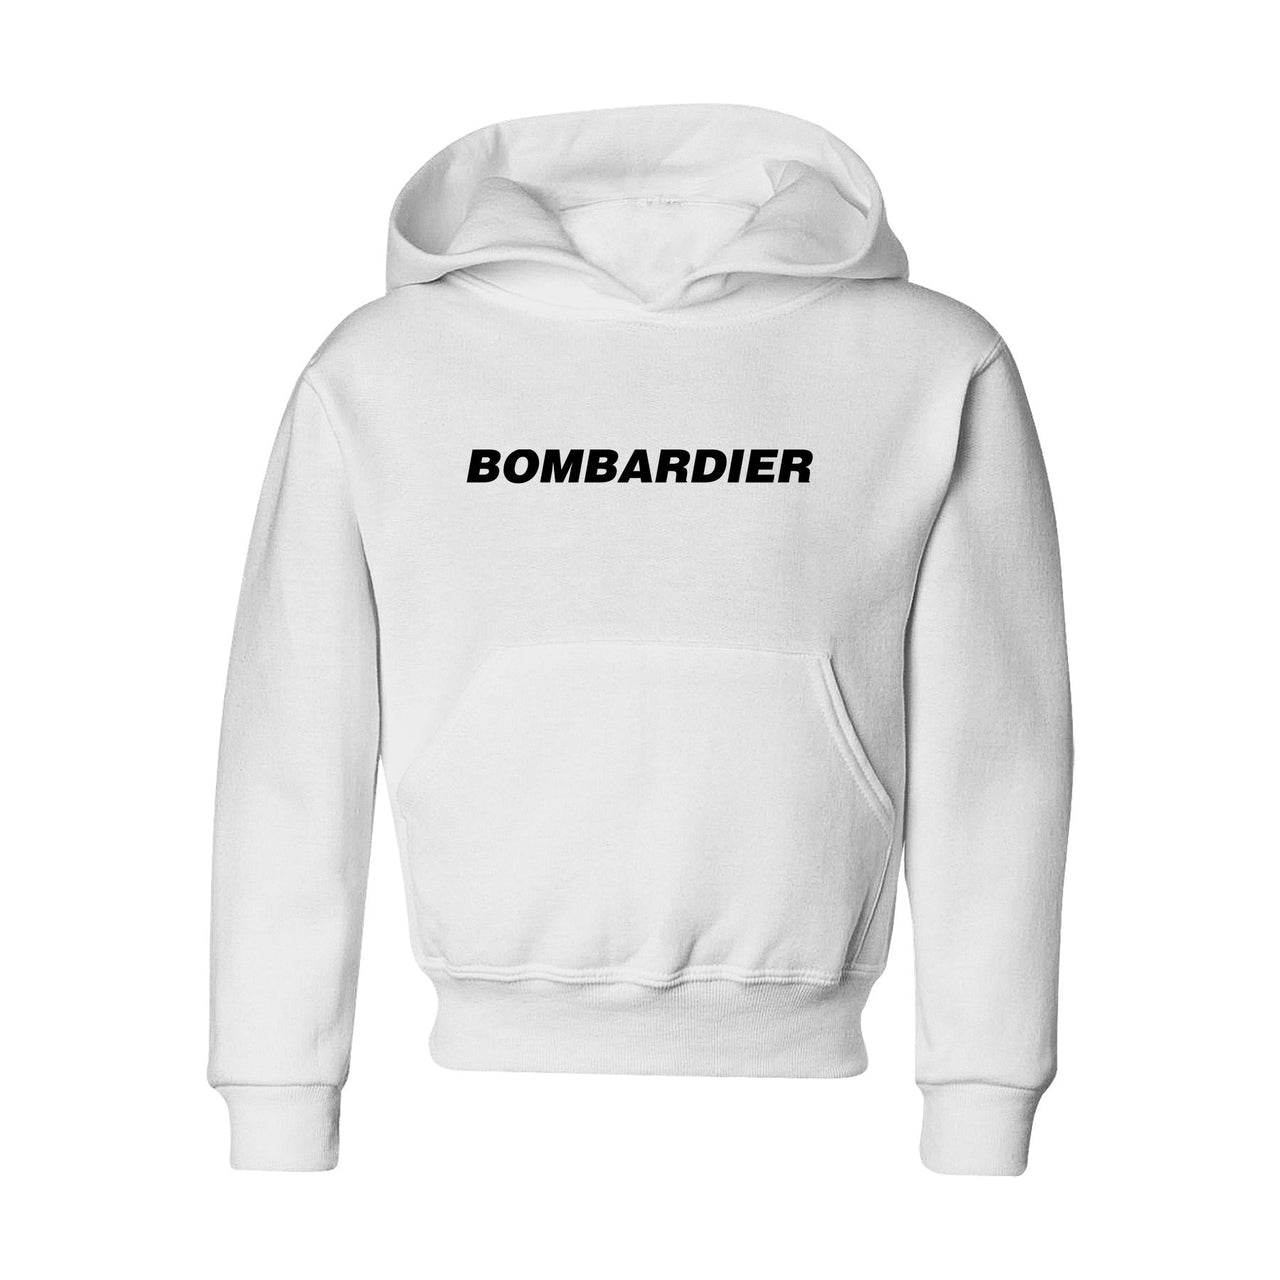 Bombardier & Text Designed "CHILDREN" Hoodies